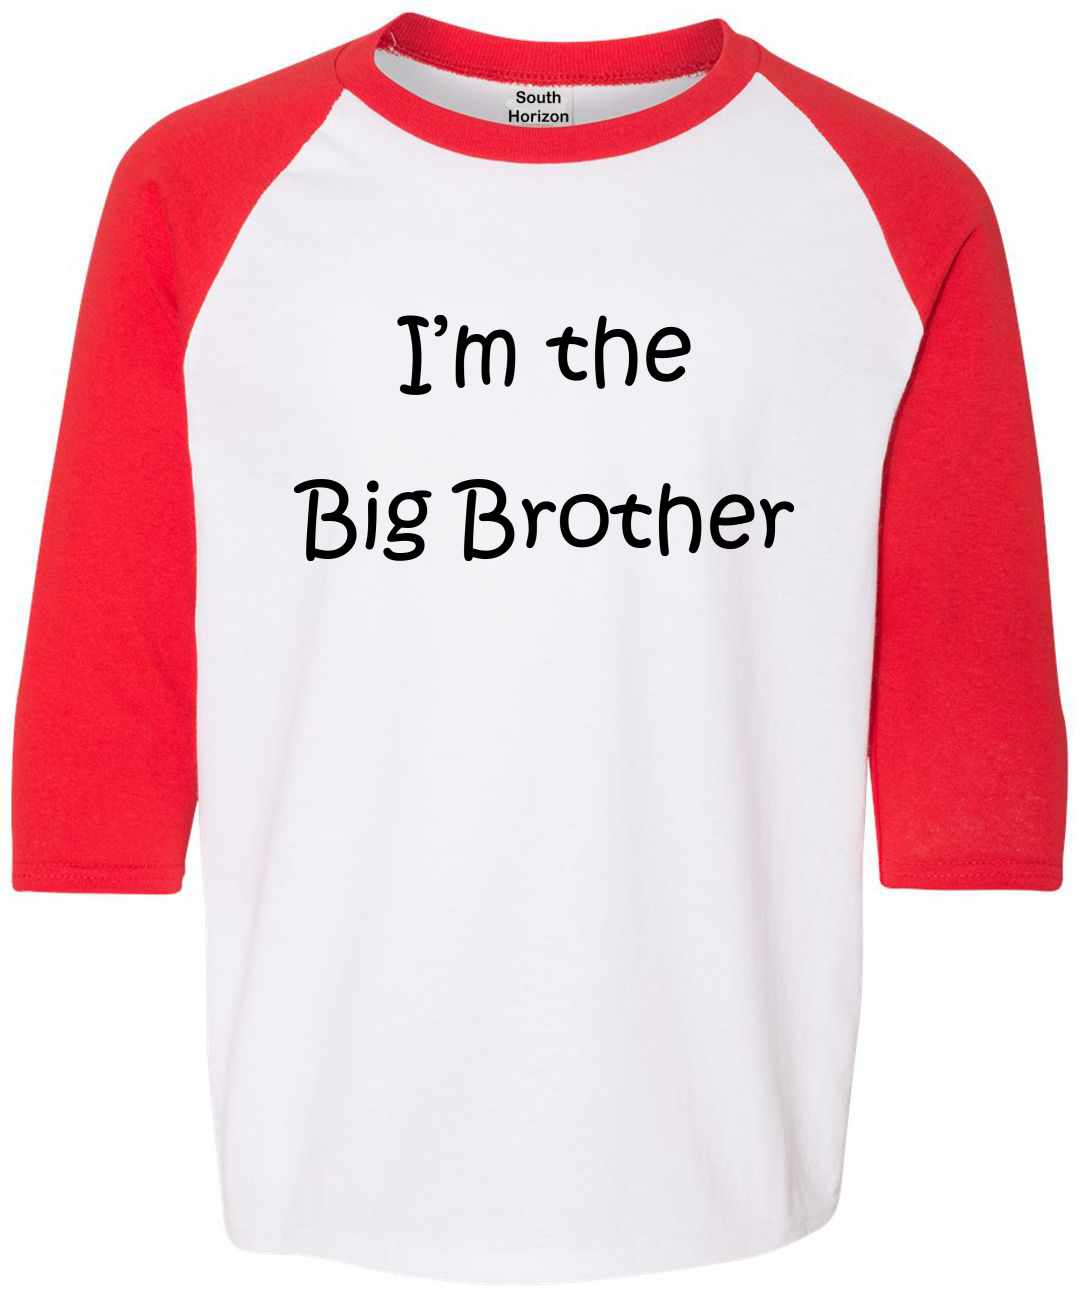 I'M THE BIG BROTHER on Youth Baseball Shirt